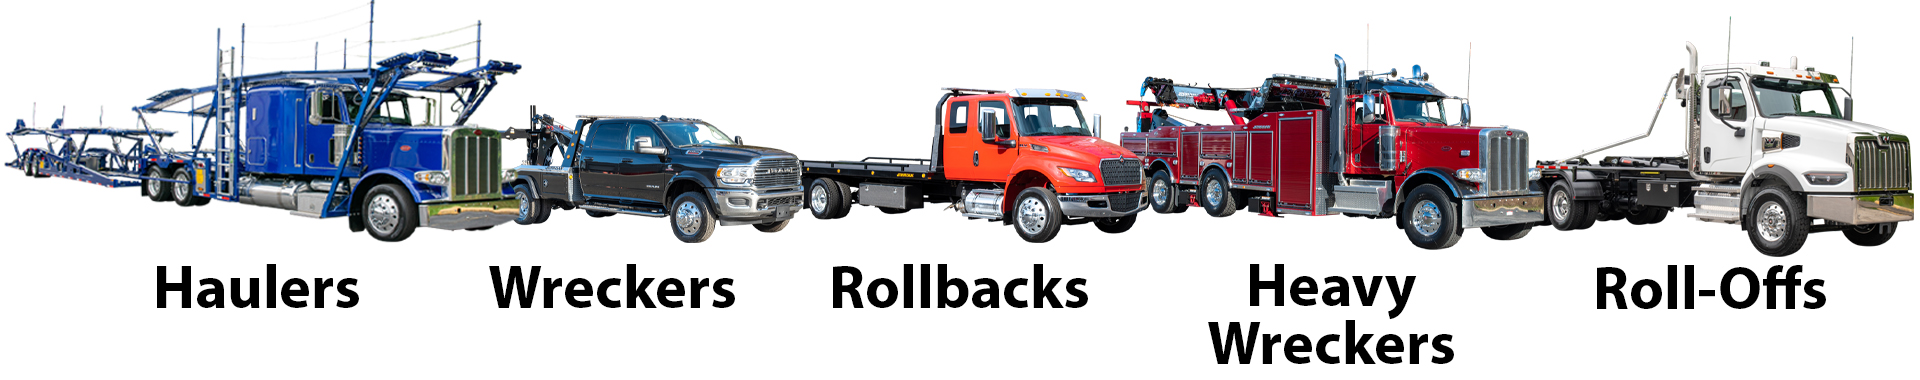 Car Haulers, Wreckers, Rollbacks, Heavy Wreckers, Roll-Off Trucks, Commercial Trucks photo